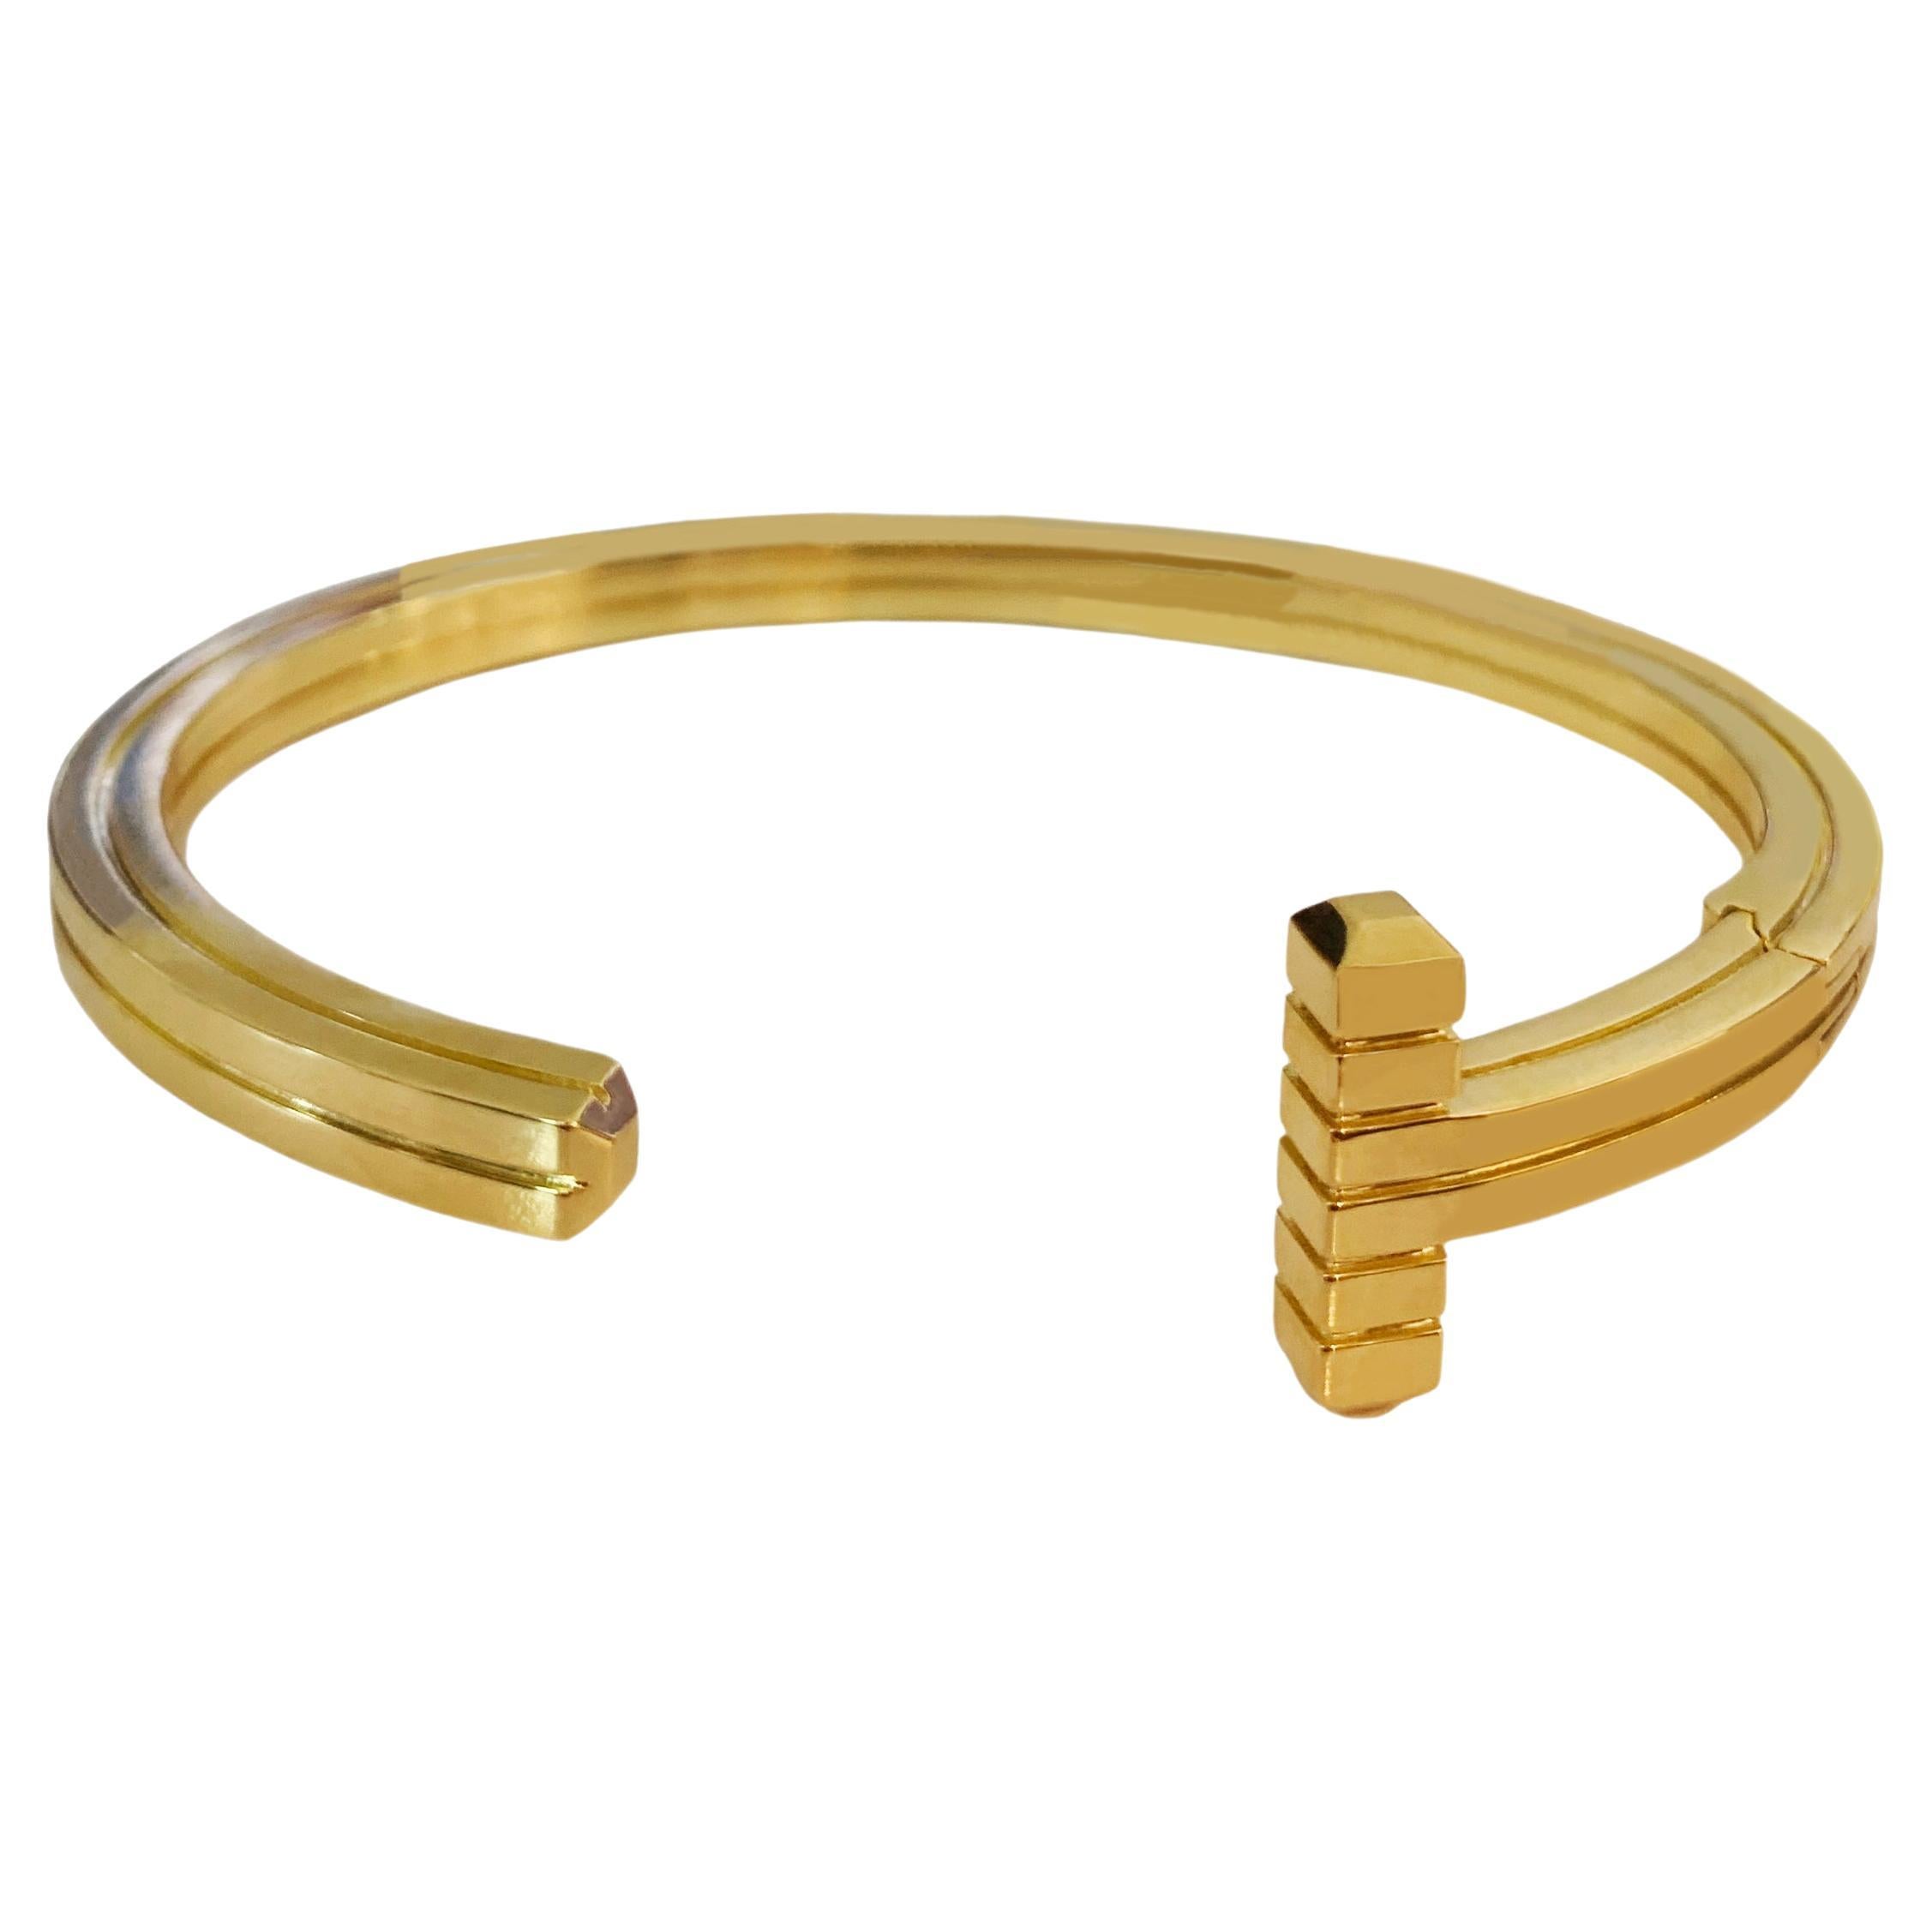 Buy Dainty and Minimalist Bangle Bracelet Cuff Bracelet 18k Gold Online in  India  Etsy